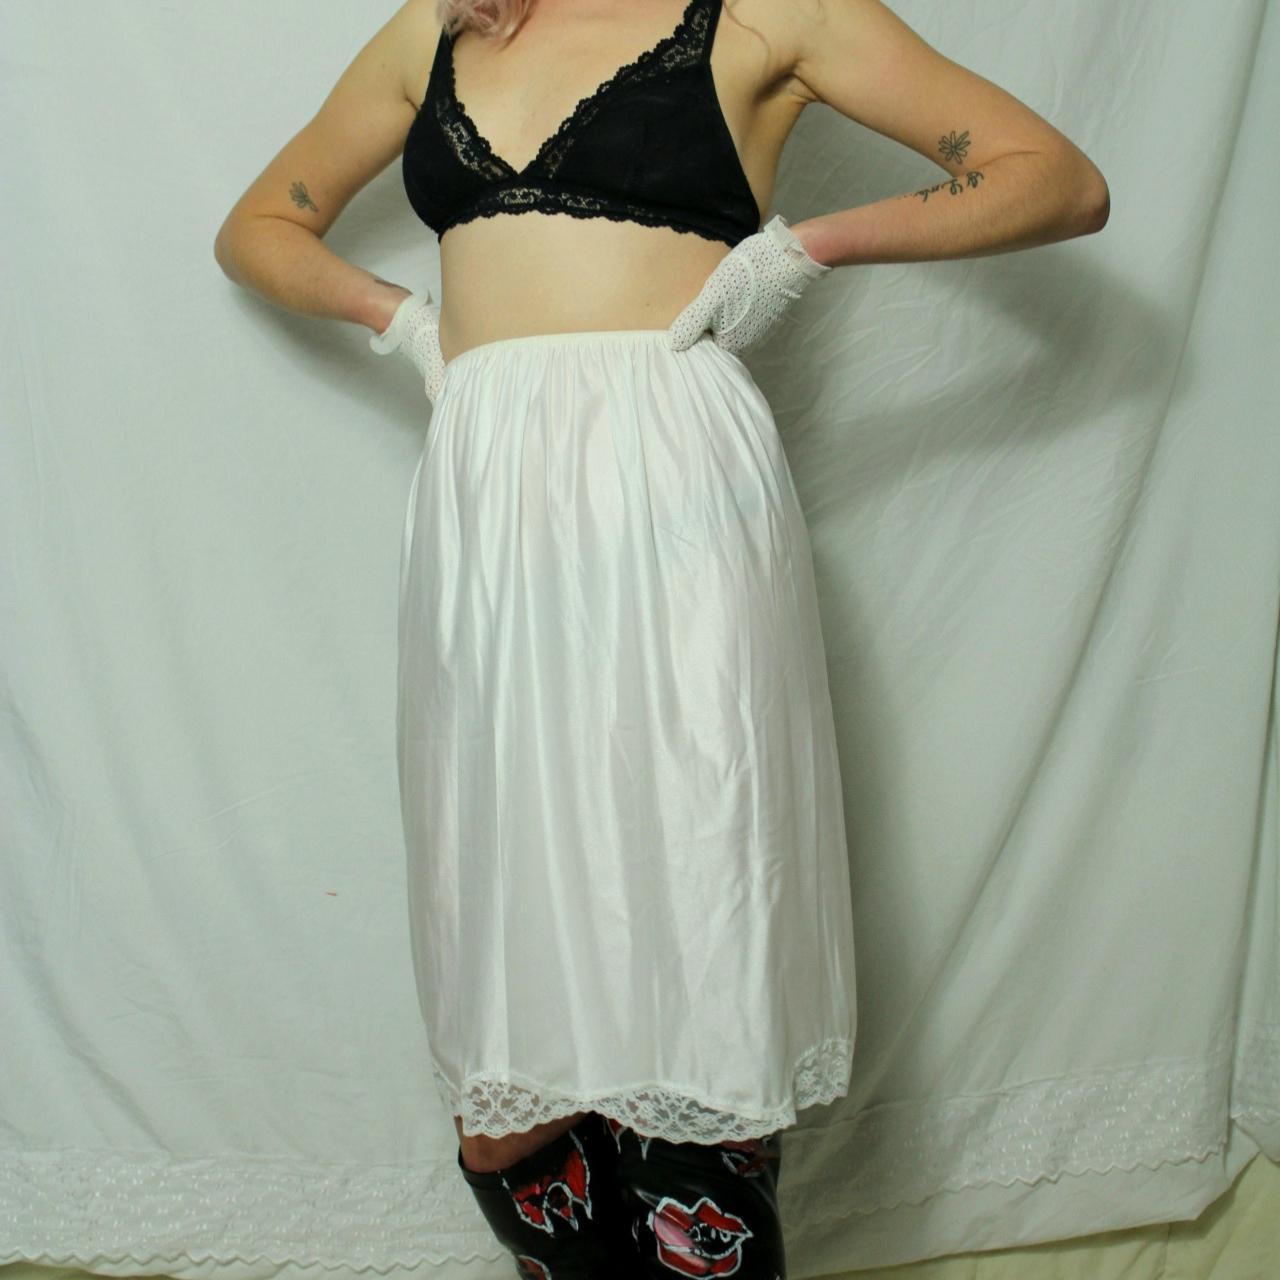 Product Image 3 - Vintage White Lace Slip Skirt.

Vintage